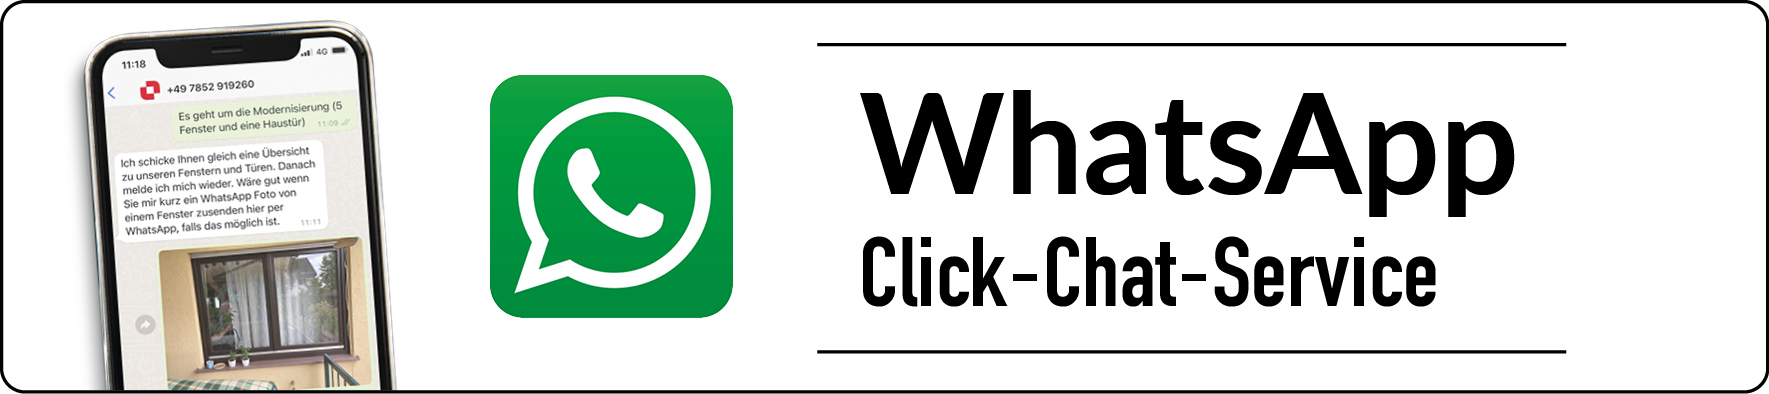 Whatsapp Click-Chat-Service